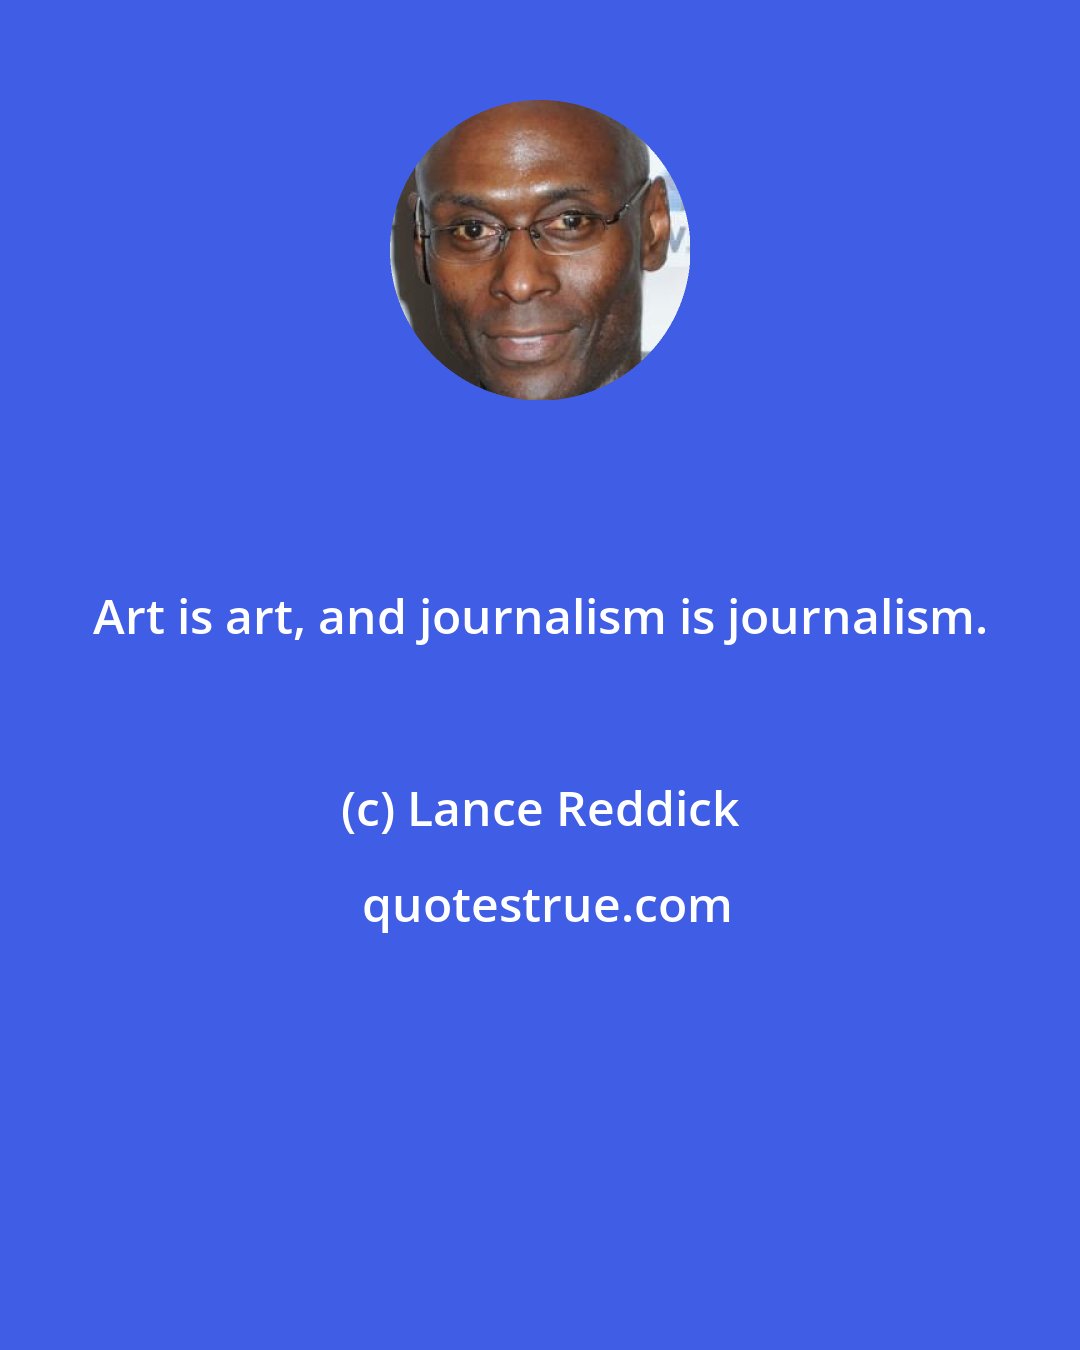 Lance Reddick: Art is art, and journalism is journalism.